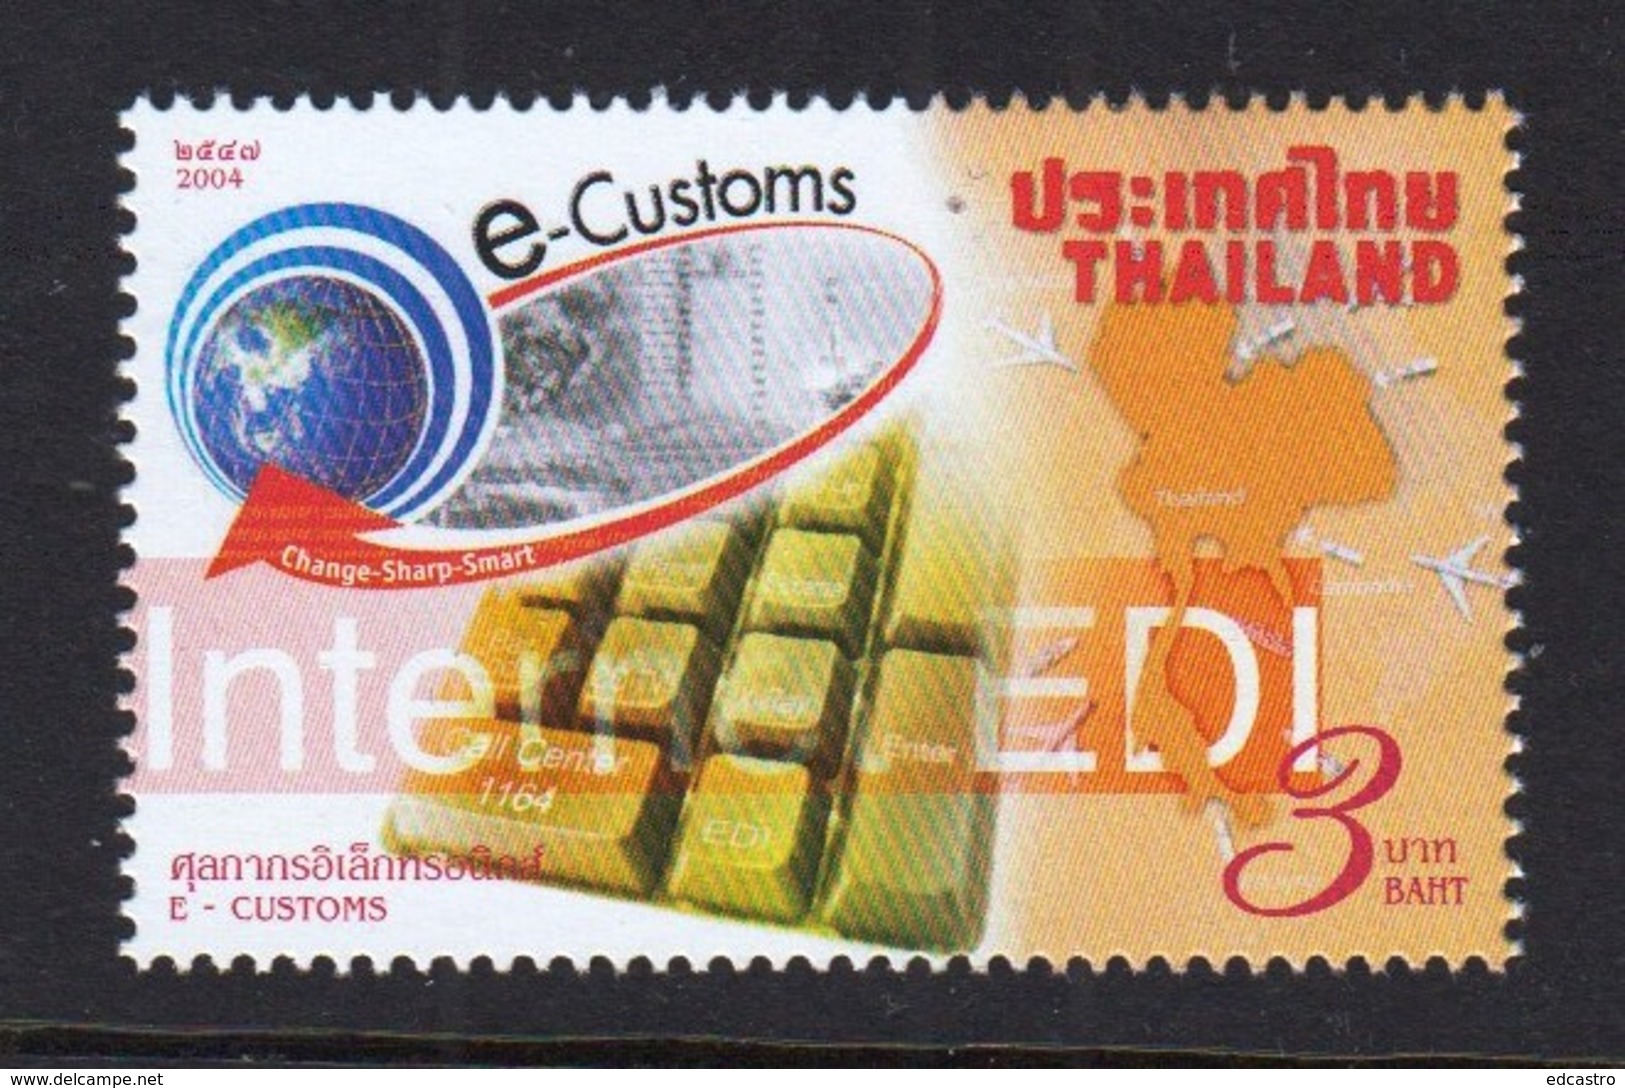 5.- THAILAND 2004 E-Customs Postage Stamp - Tailandia